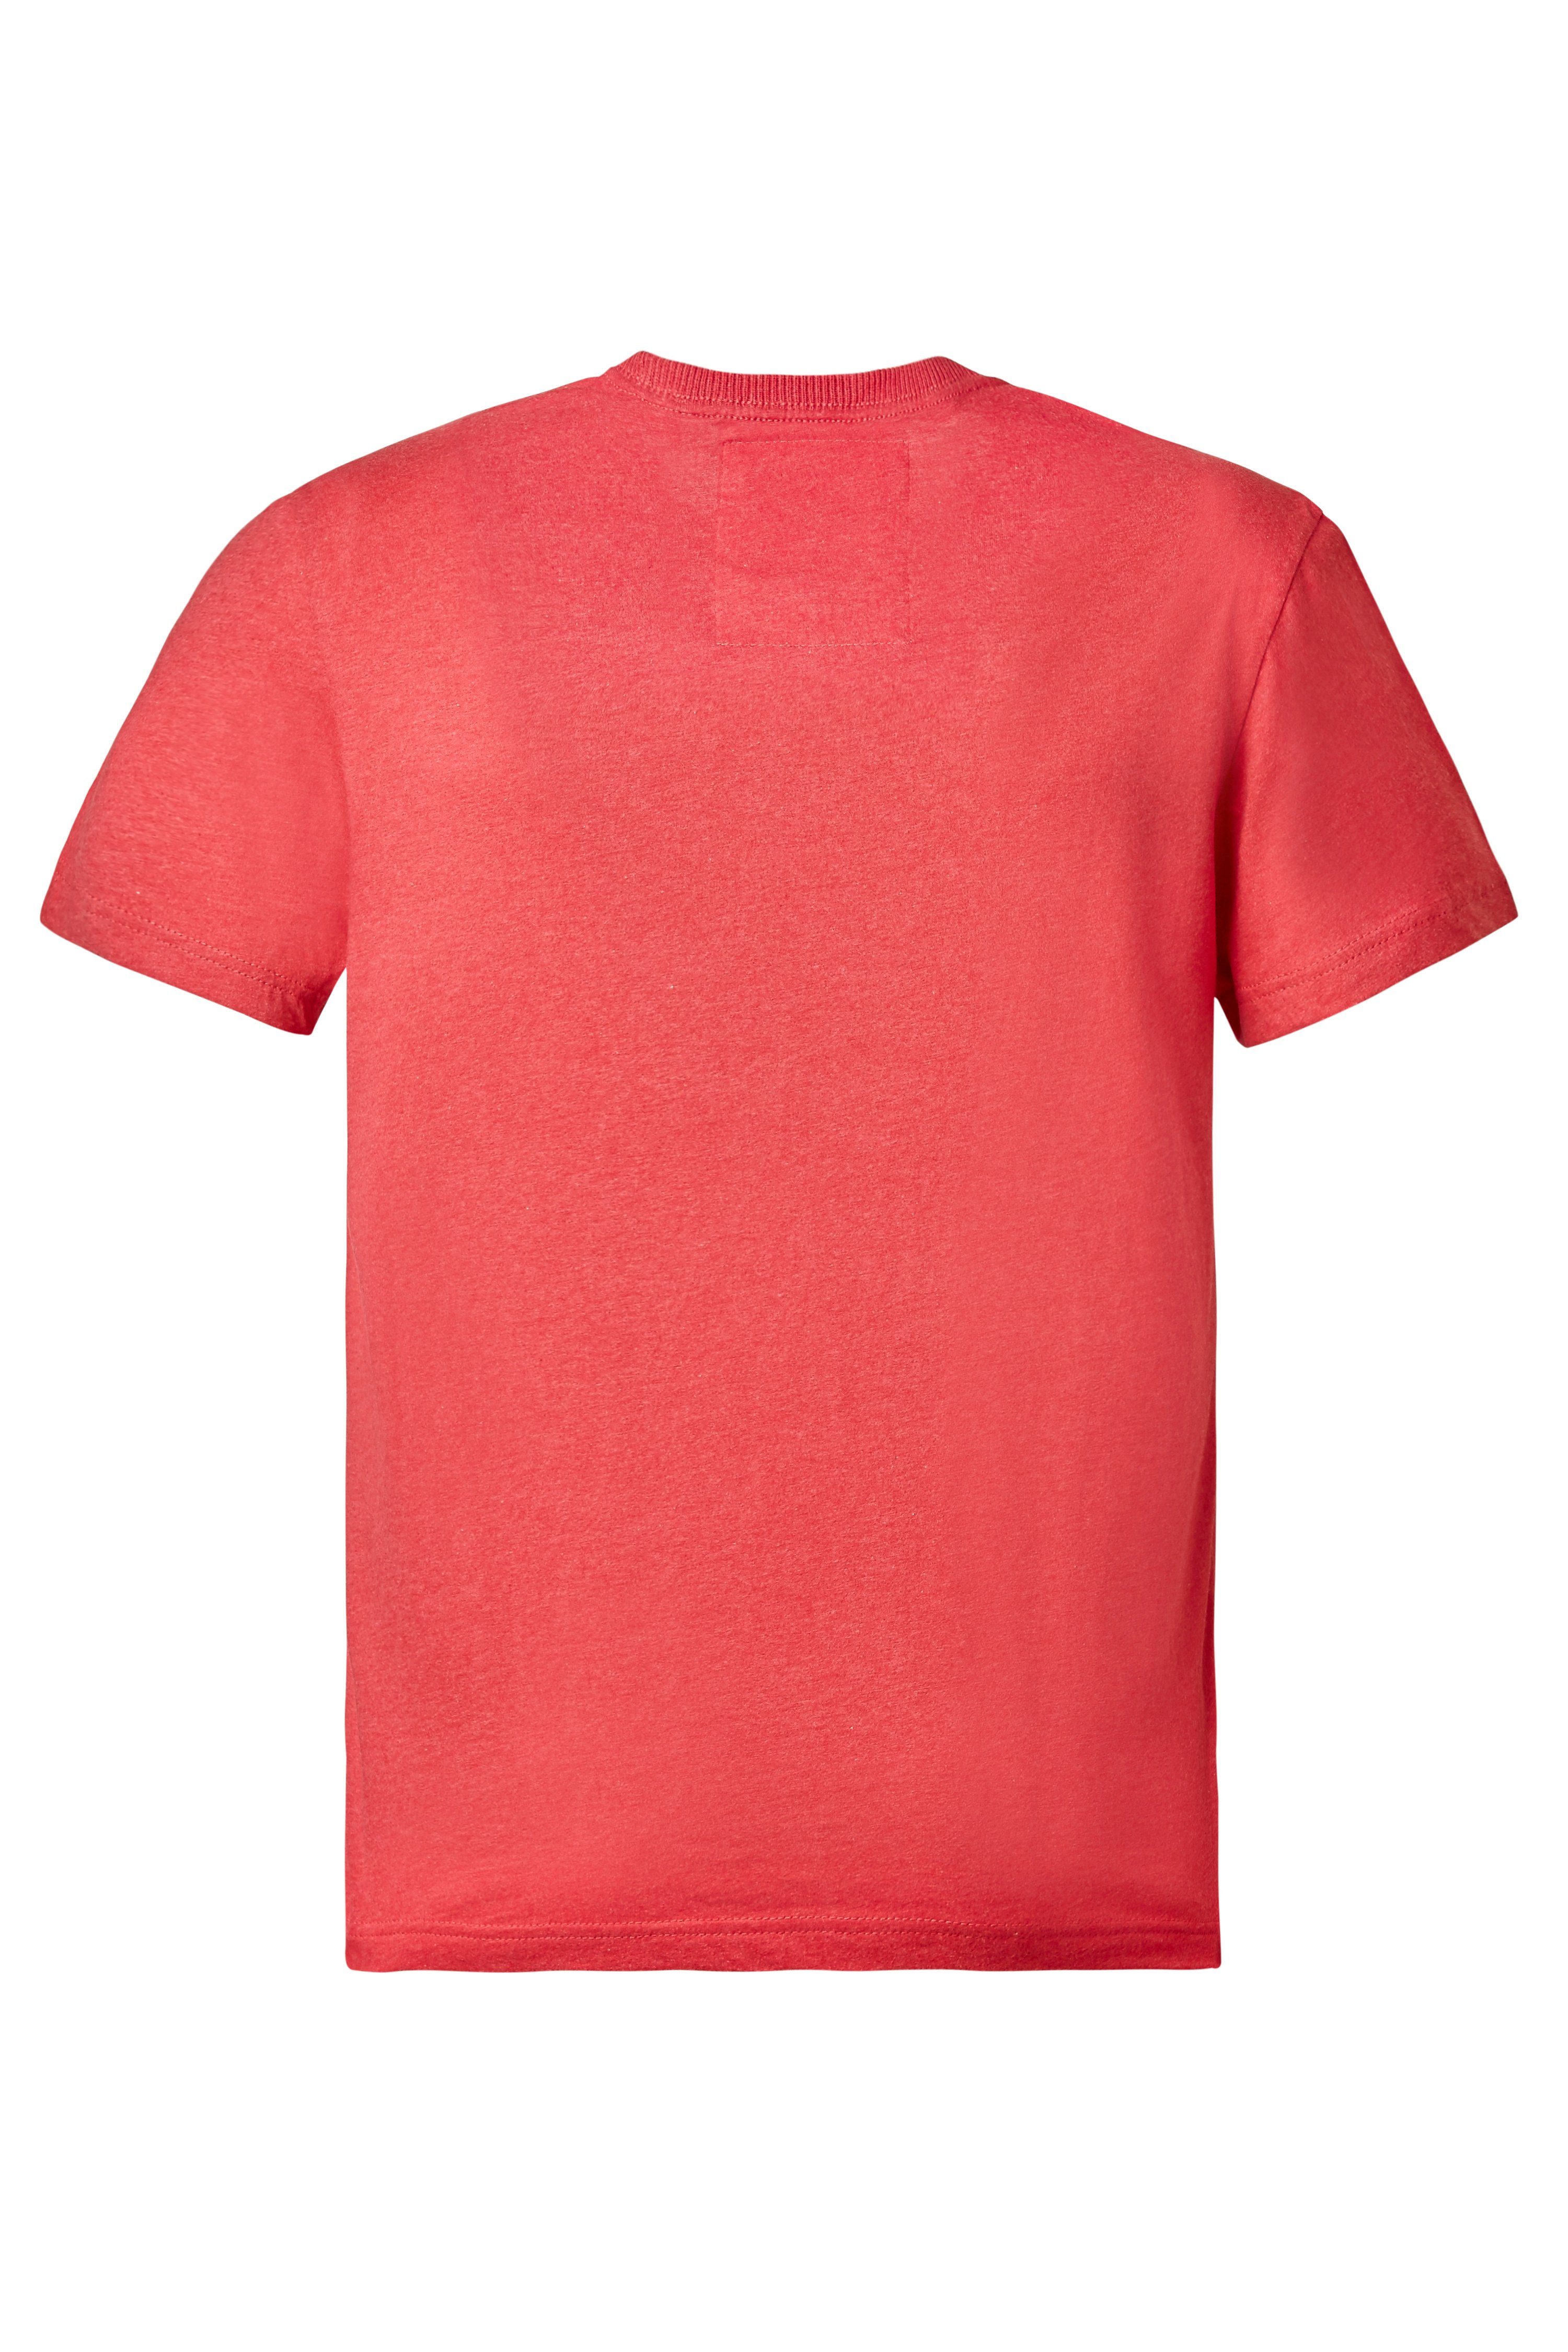 0130 red Sport melange SHERMAN T-Shirt Cordon 55